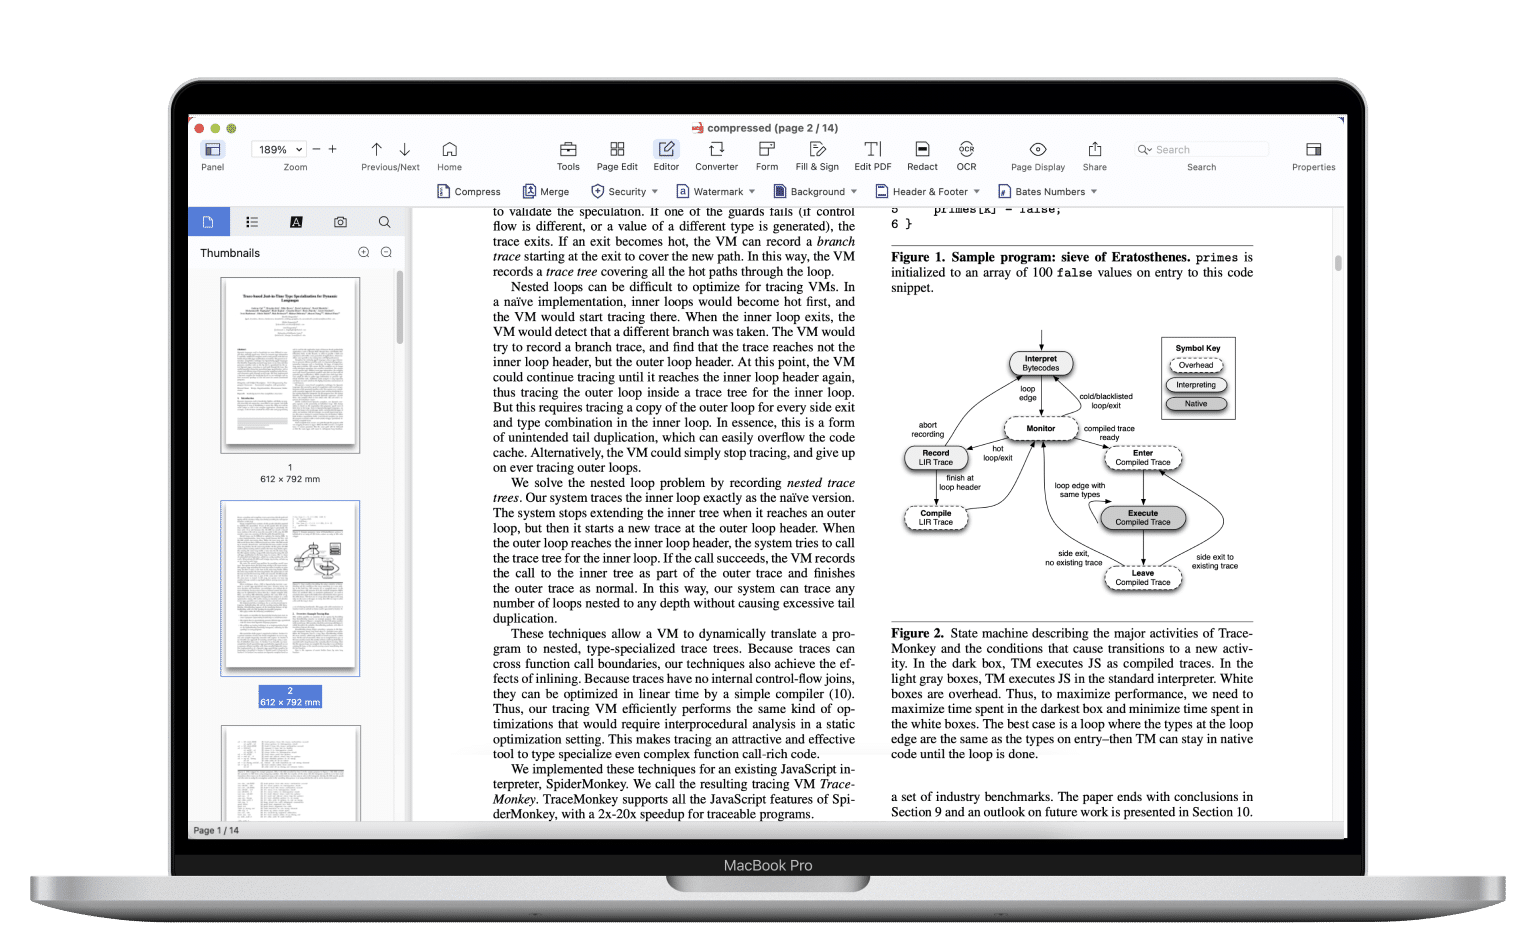 pdf for mac free download